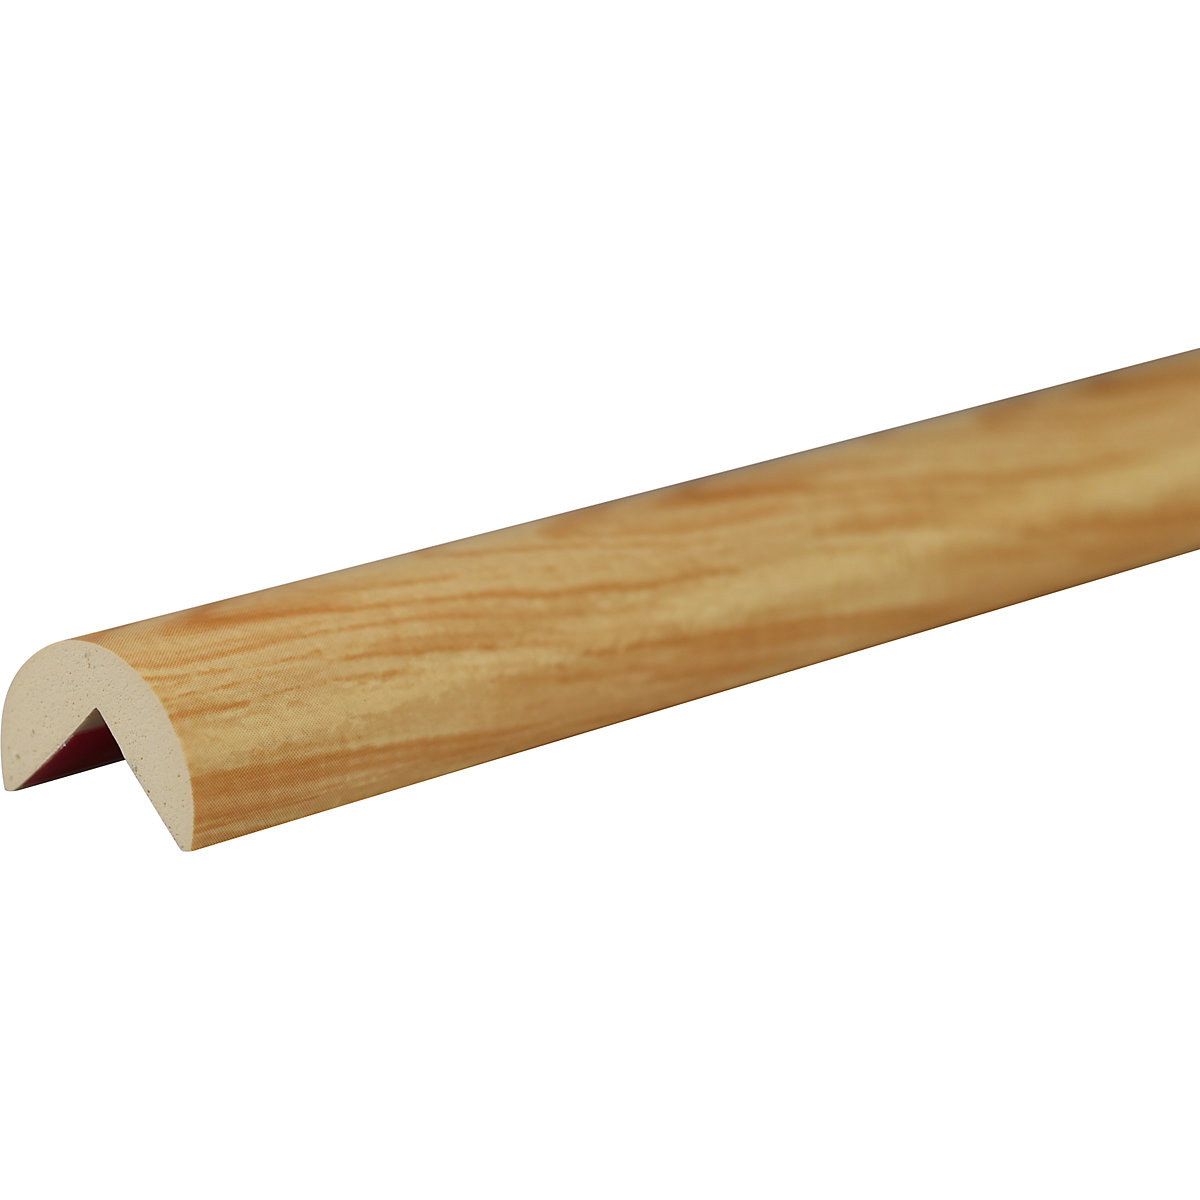 Knuffi® corner protection – SHG, type A, 1 m piece, natural wood finish-28